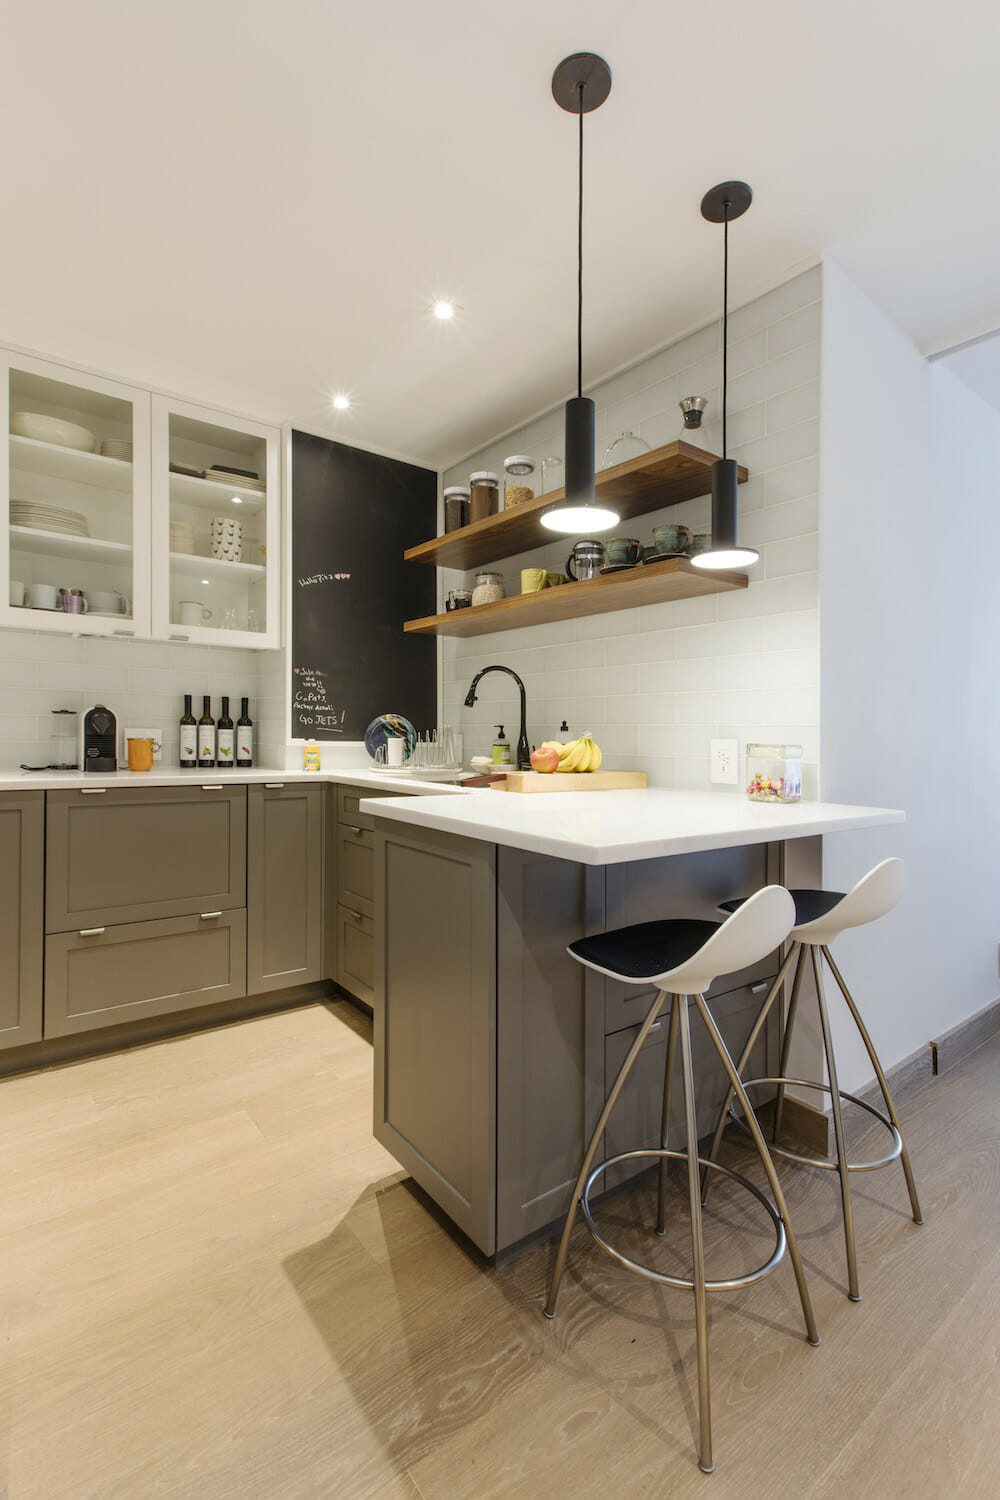 White and gray kitchen in studio apartment